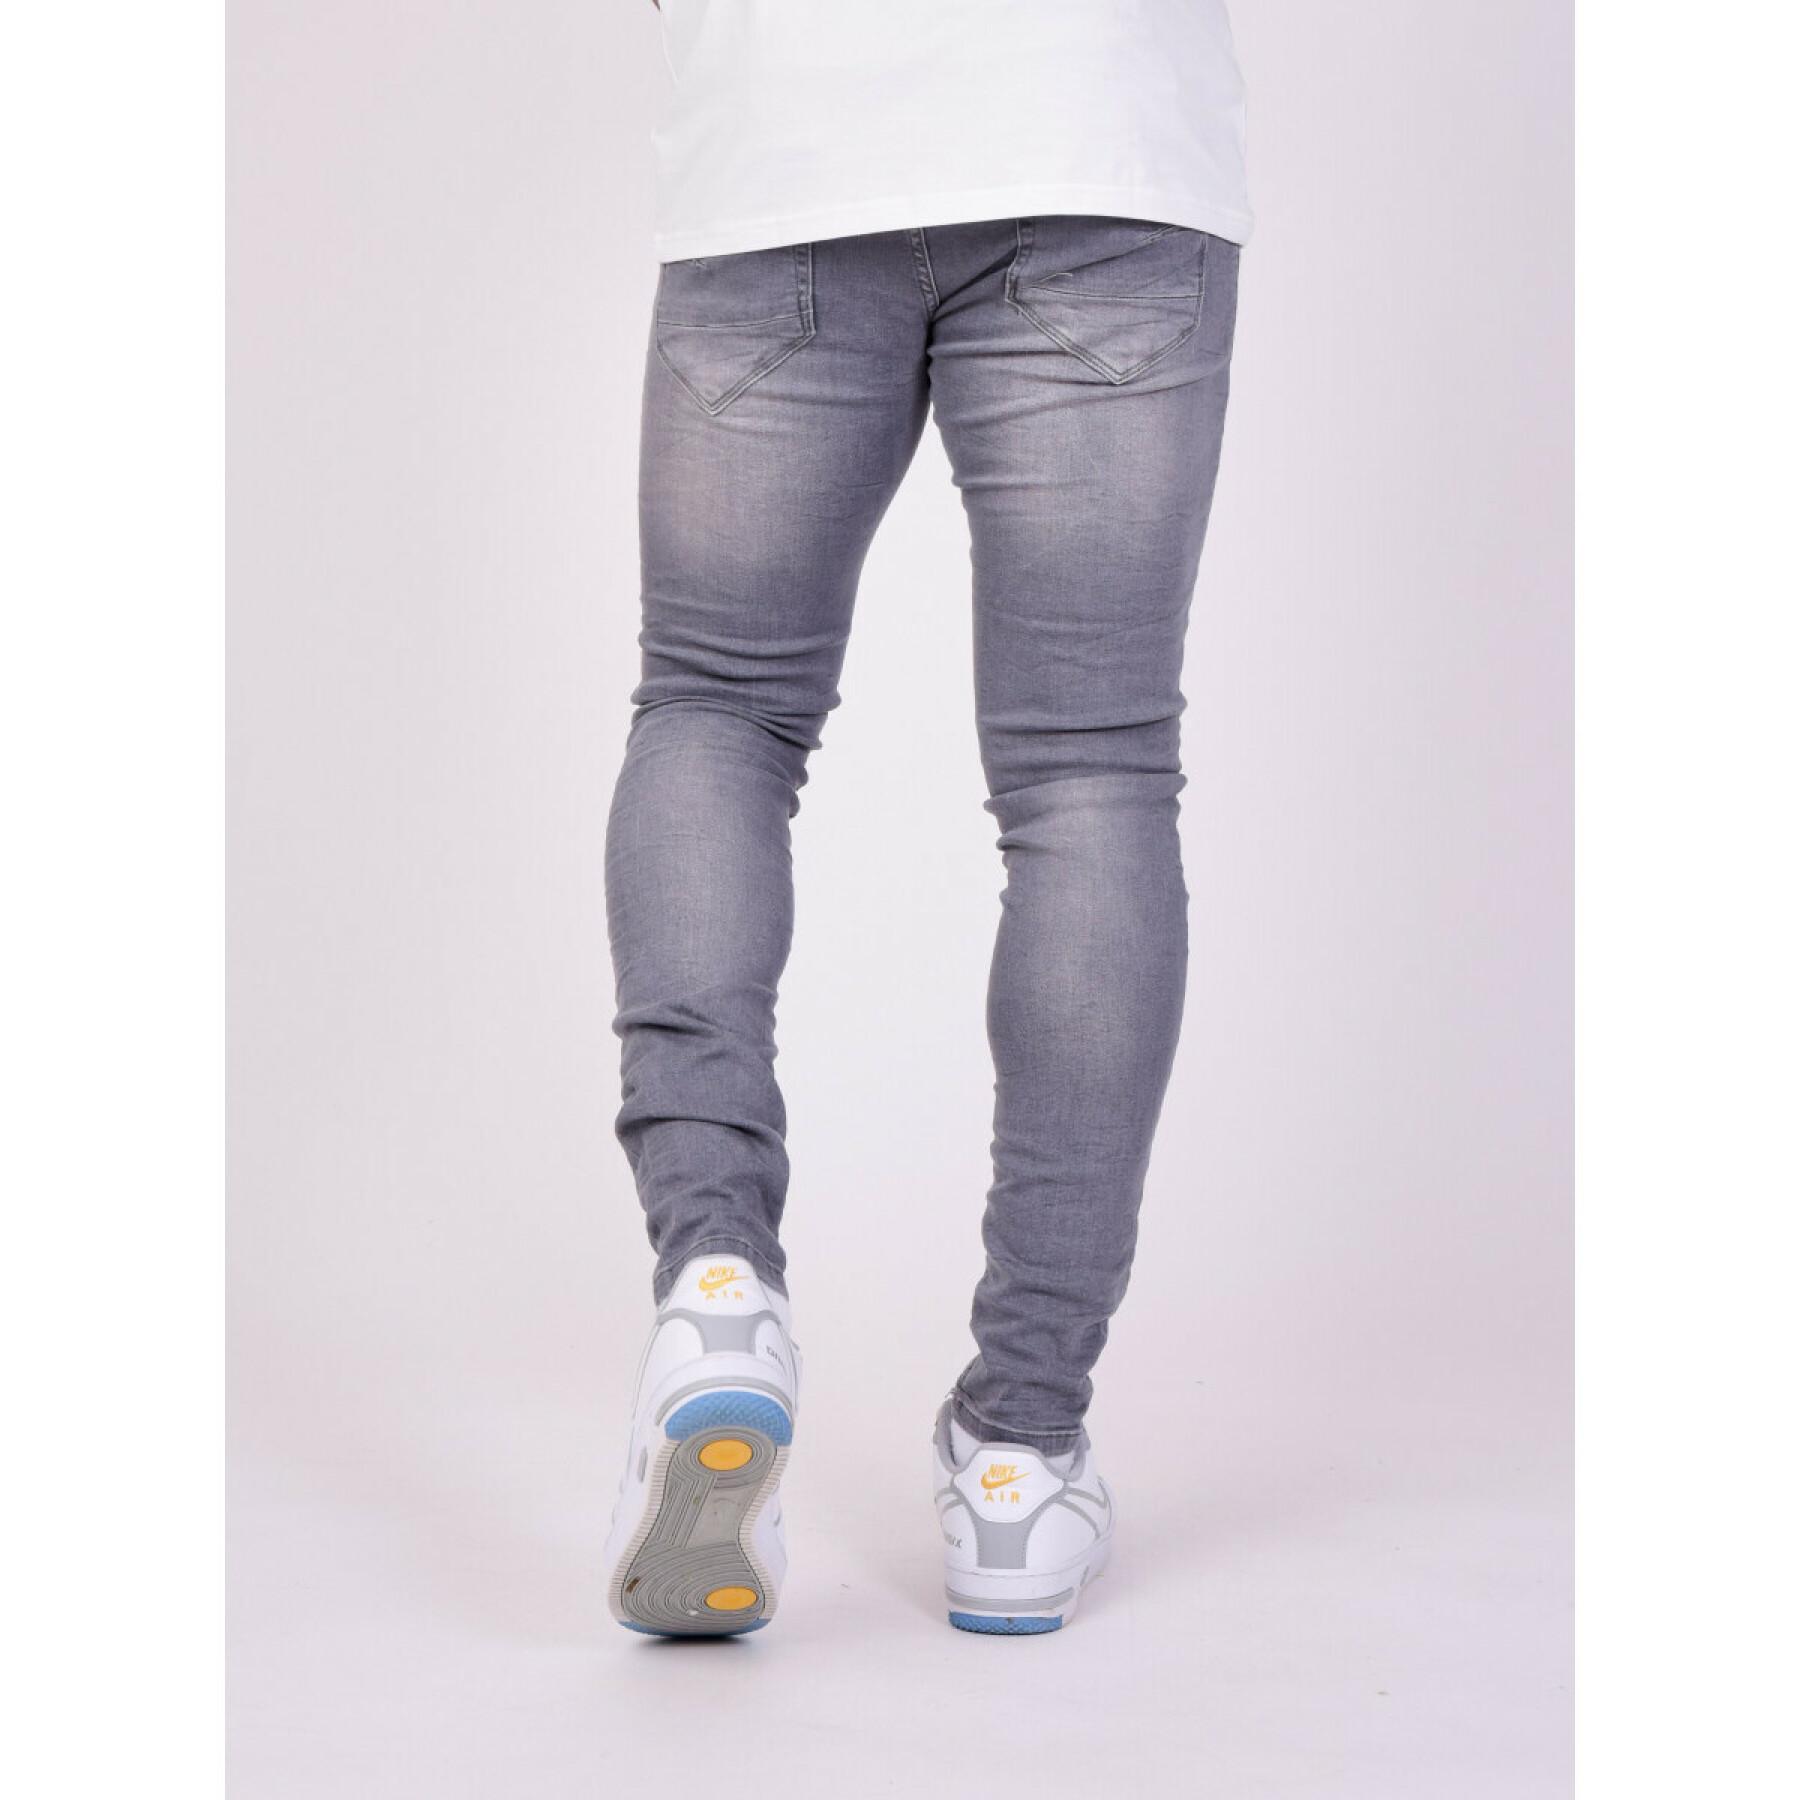 Skinny jeans Project X Paris